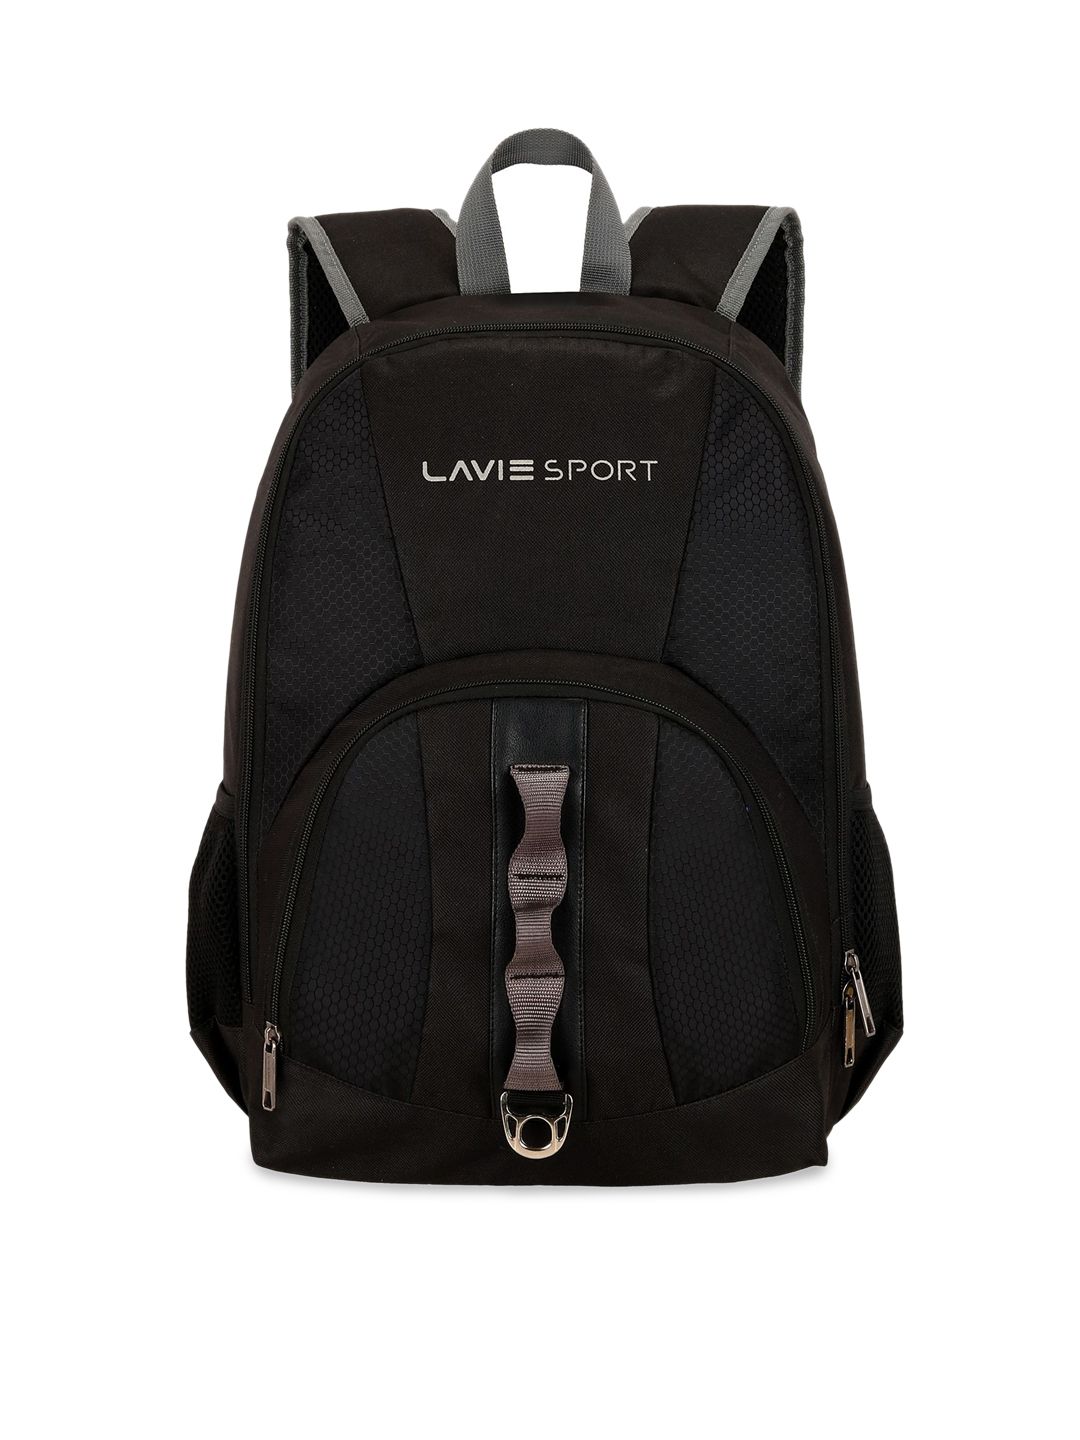 Lavie Unisex Black Solid Backpack Price in India